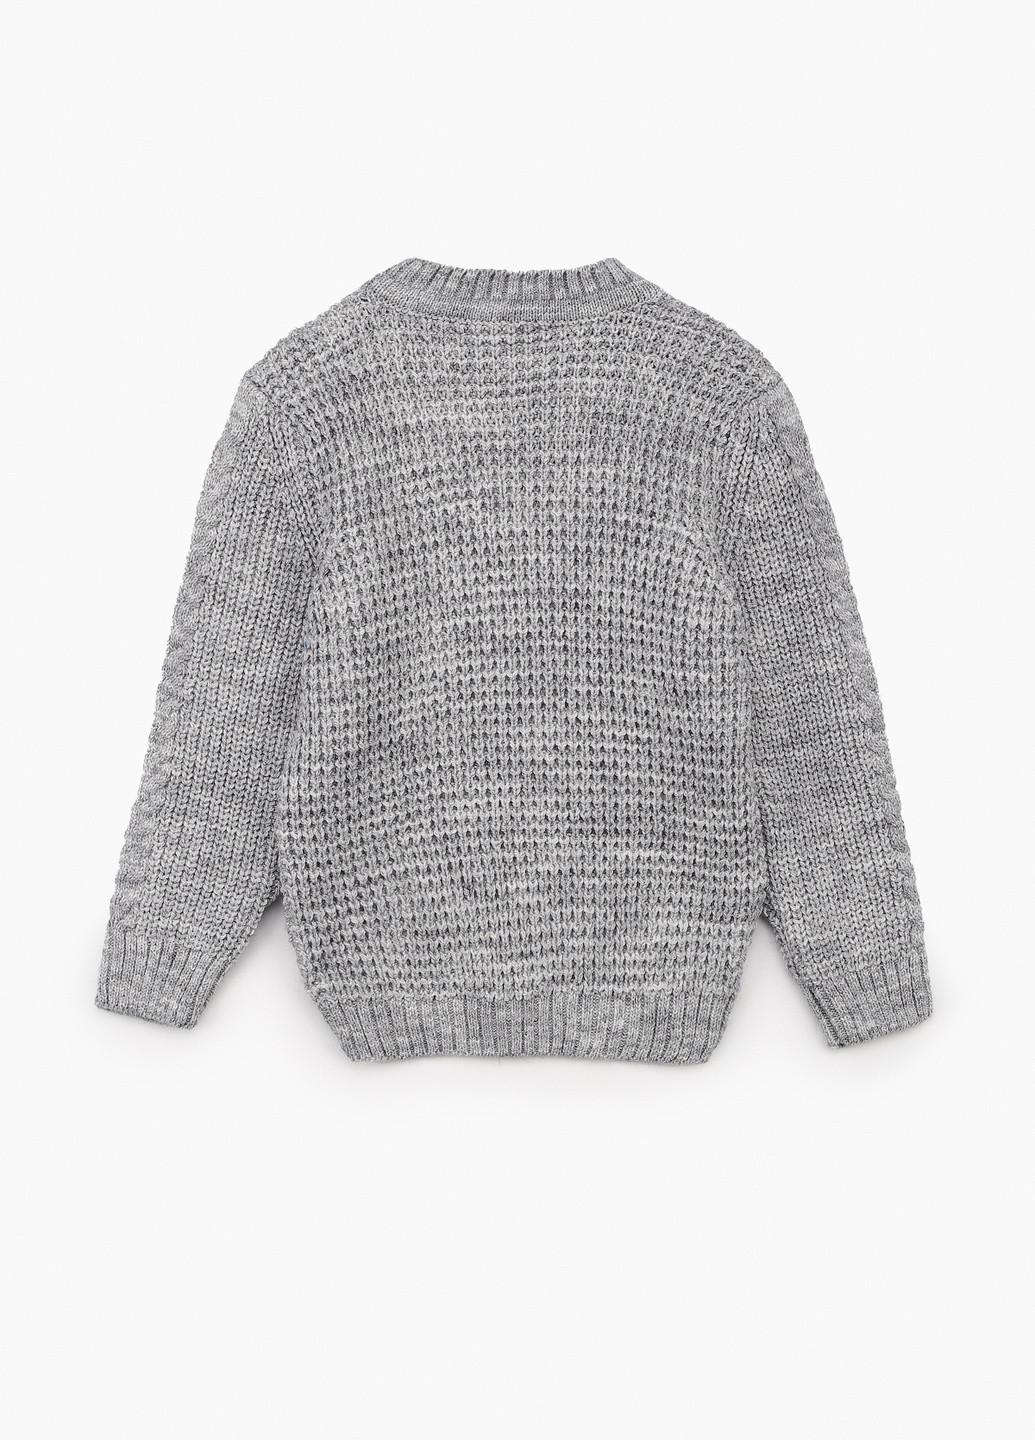 Серый зимний свитер Toontoy